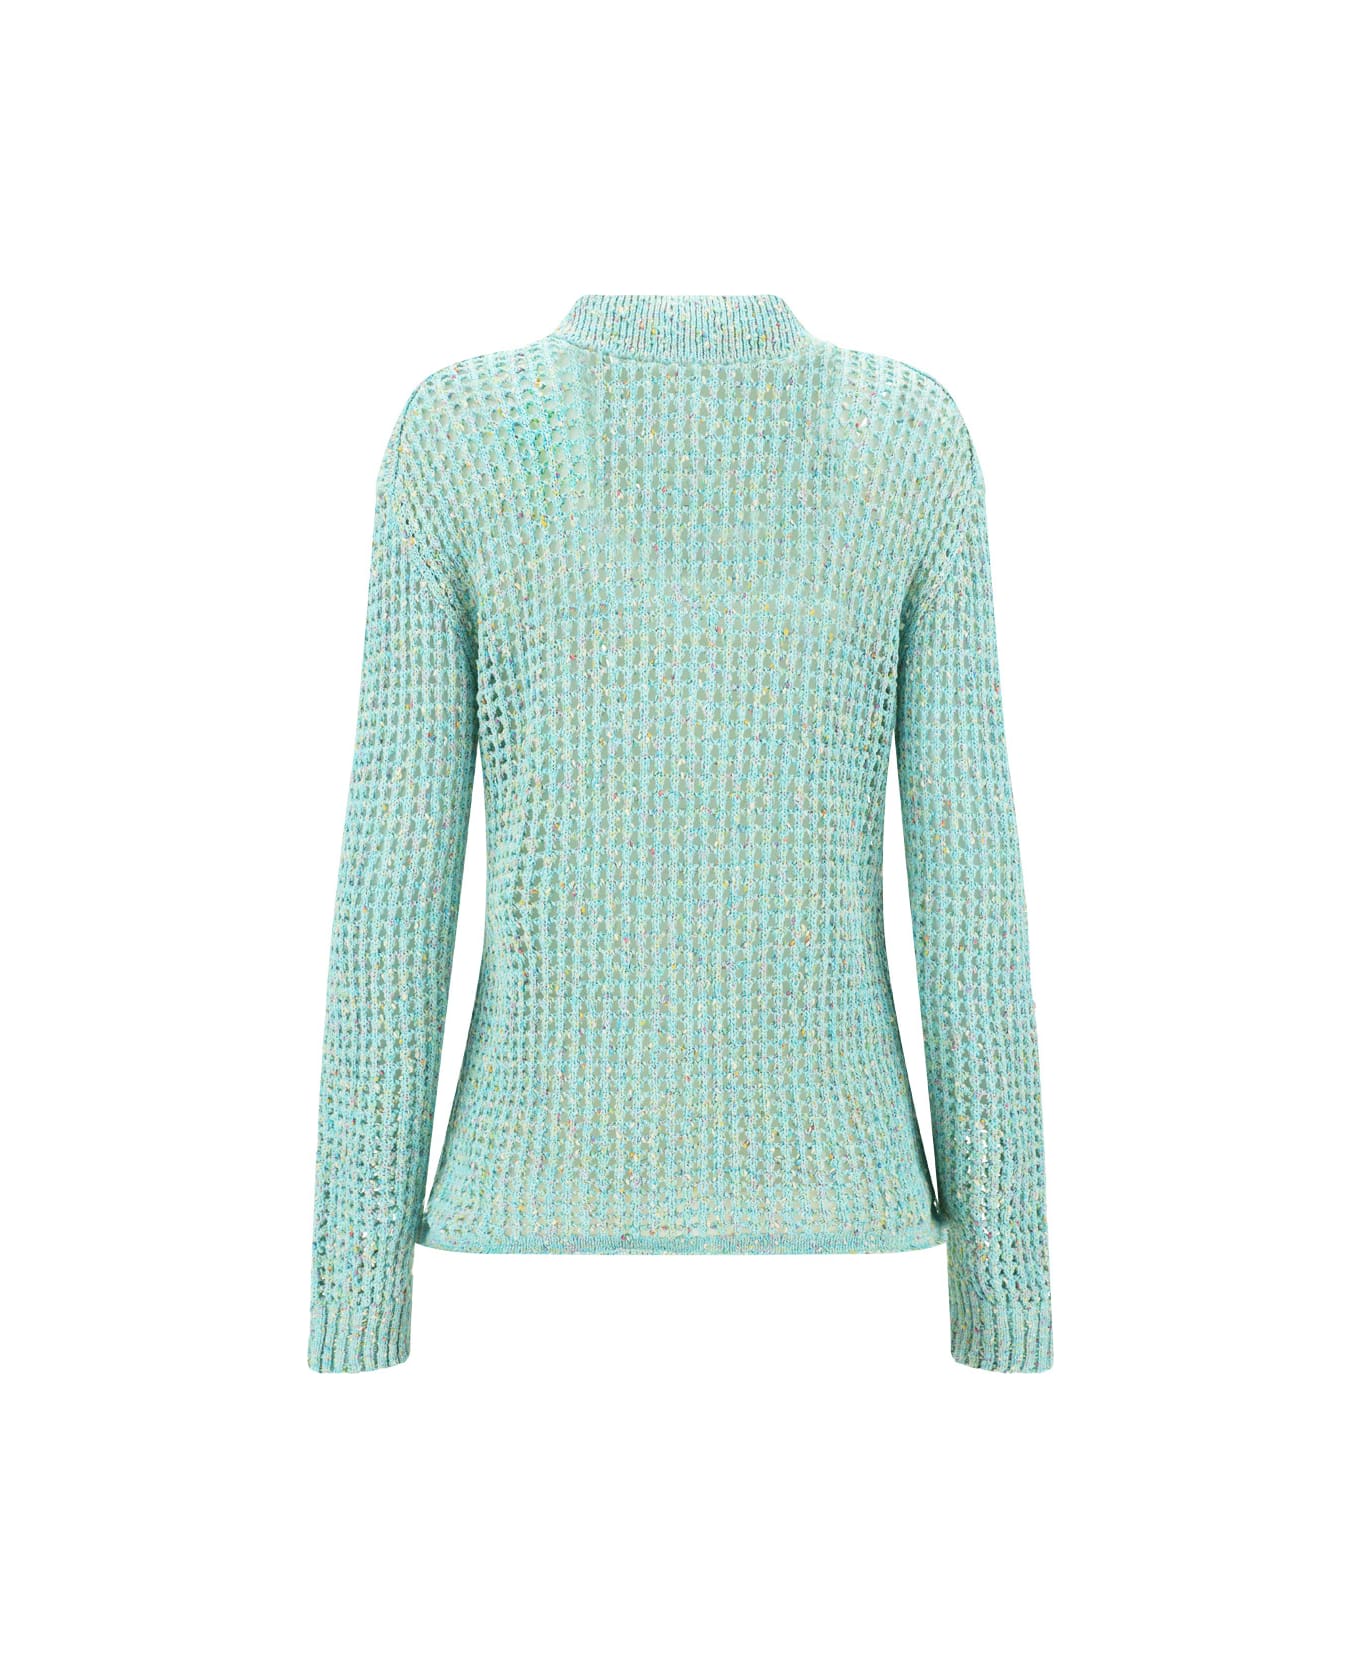 Acne Studios Polo Sweater - Aqua Blue